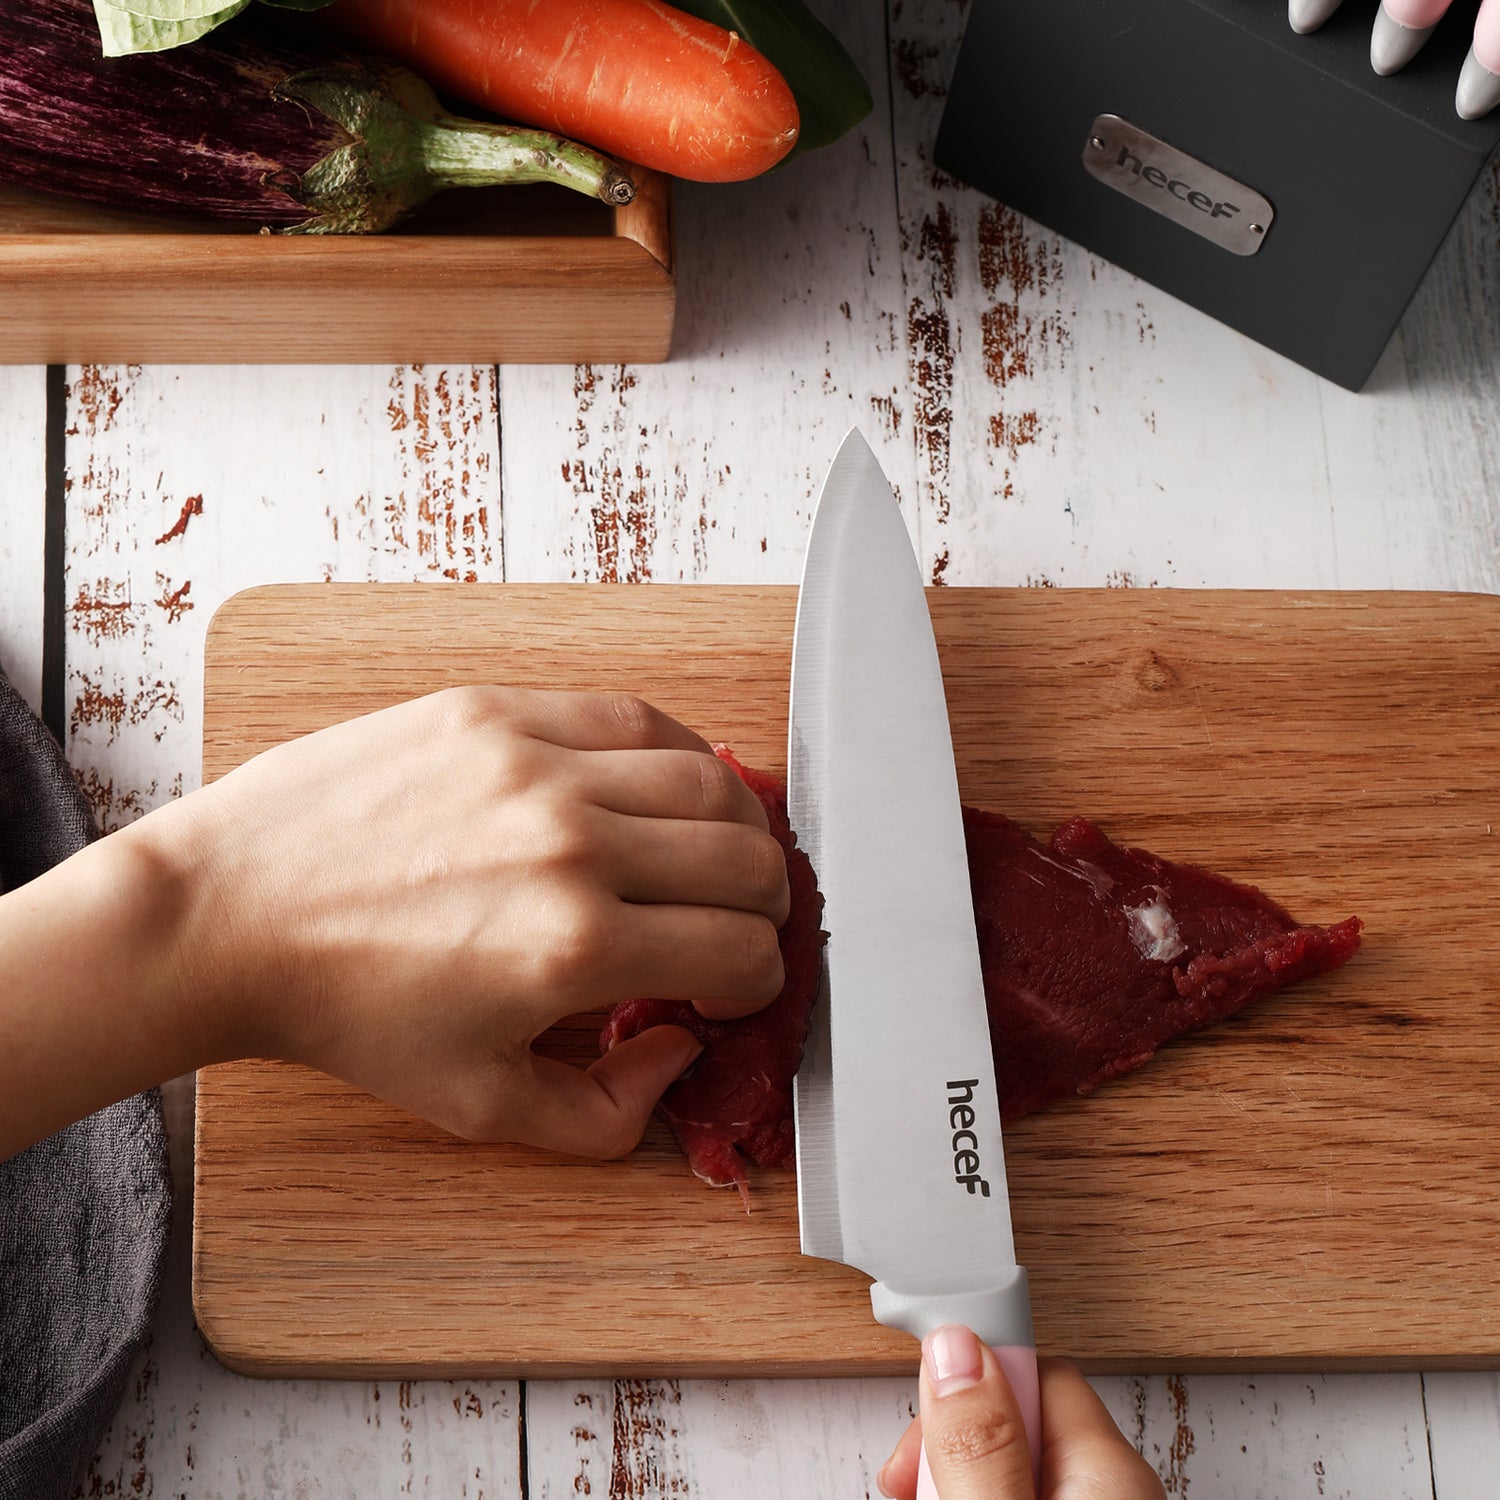 Hecef Kitchen Knife Block Cutlery Set of 14 with Honing Rod & Scissor - Hecef Kitchen